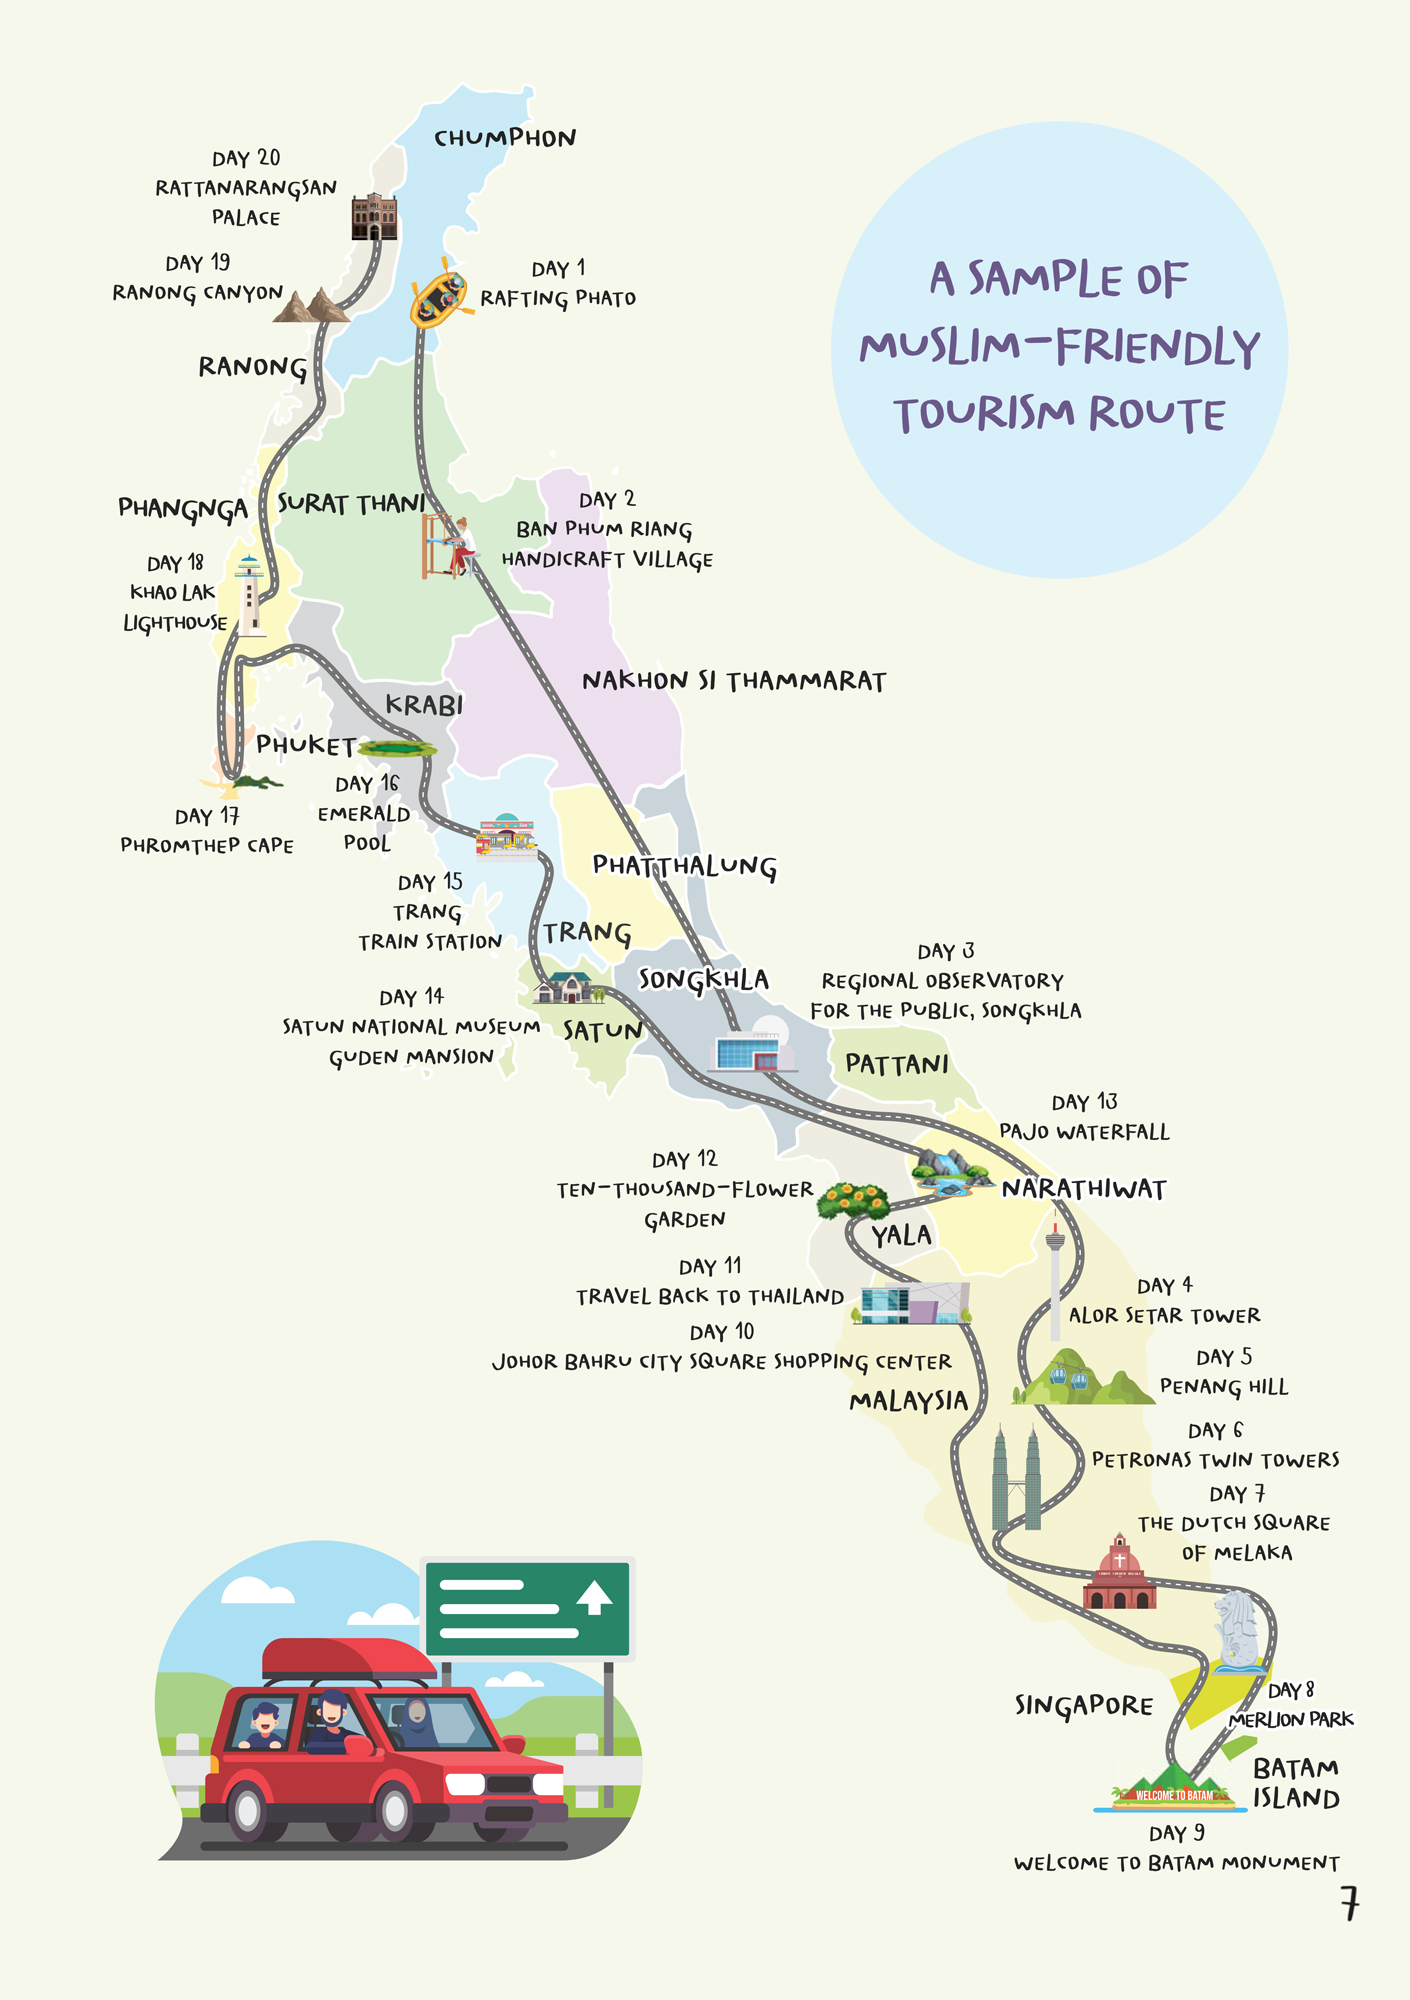 Пример туристического маршрута для мусульман